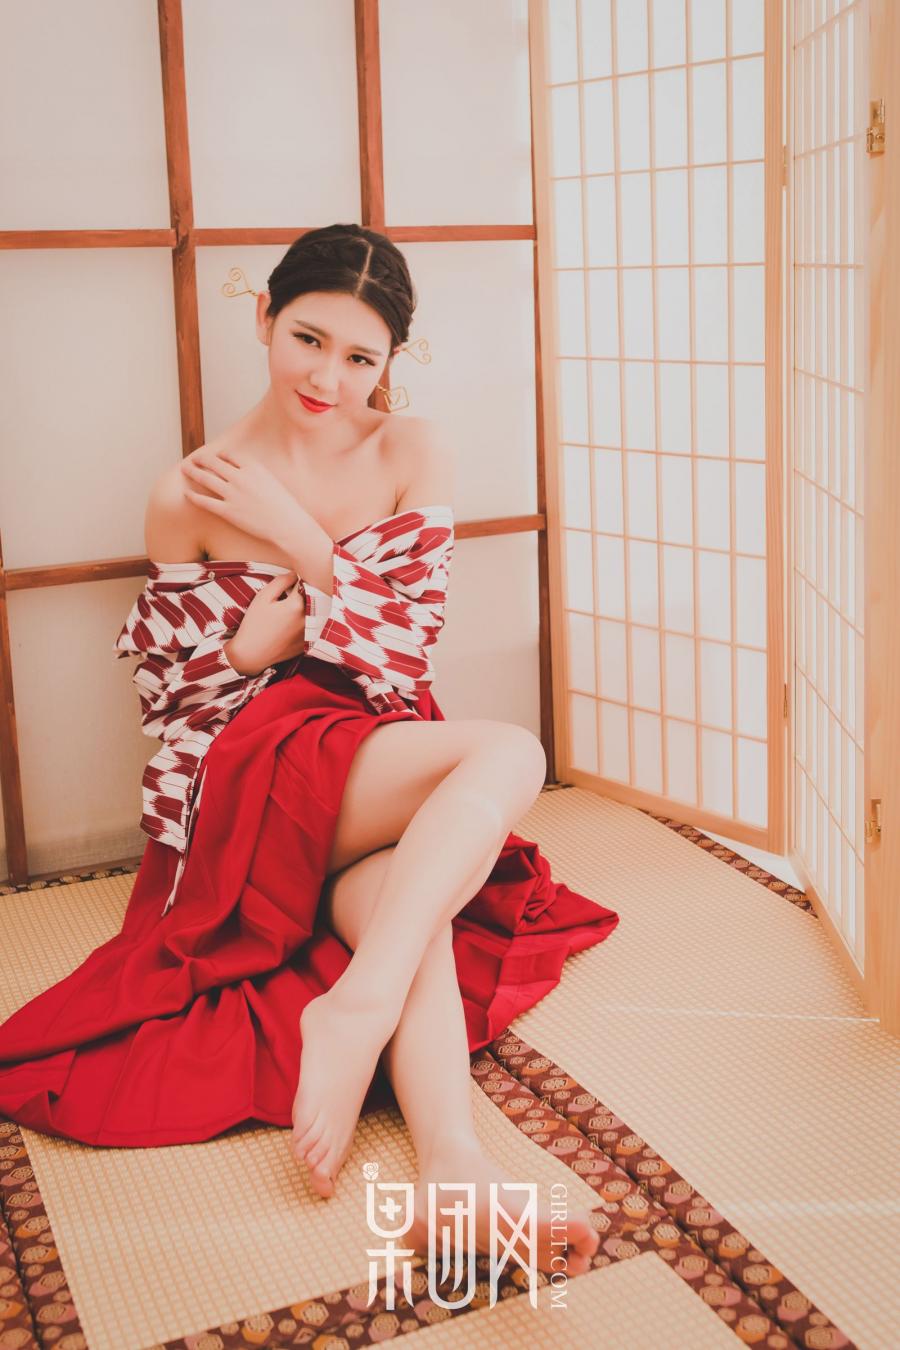 Girlt The seduction of the enchanting kimono